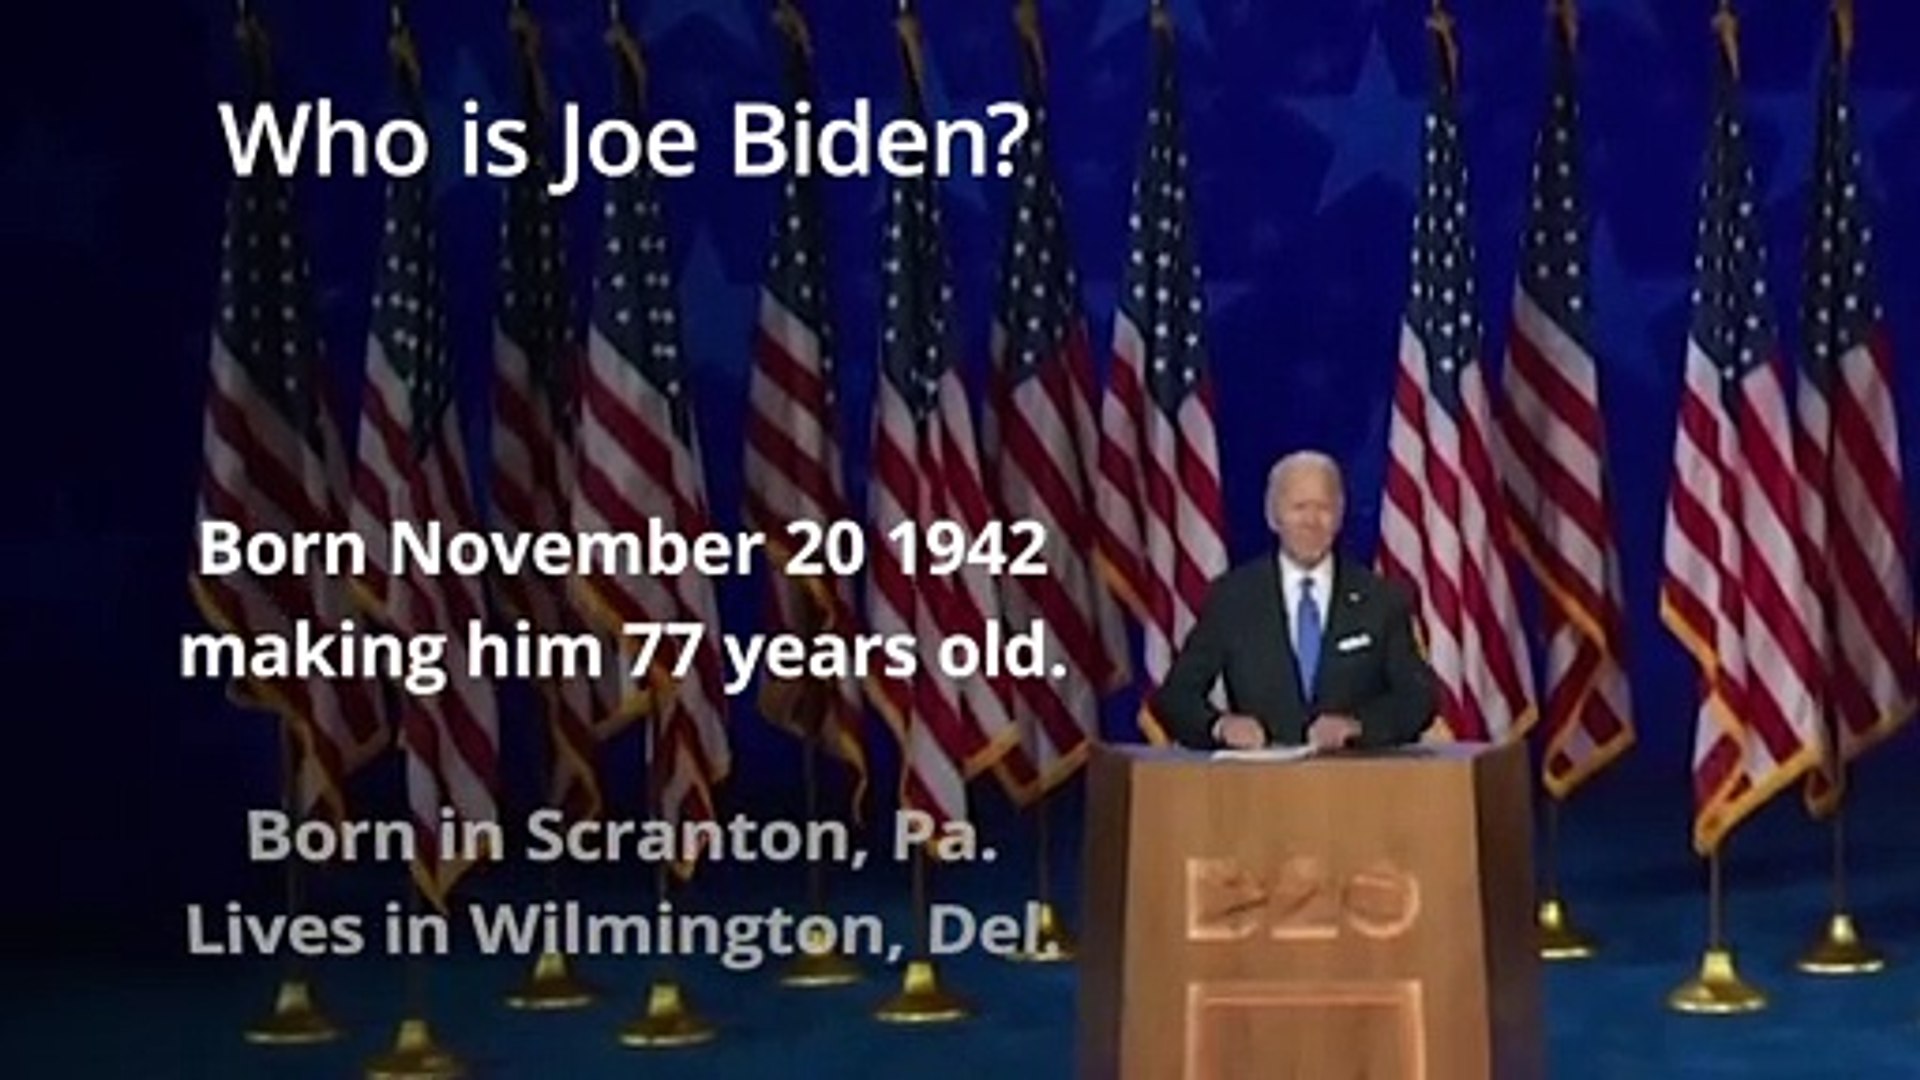 Joe Biden in profile.